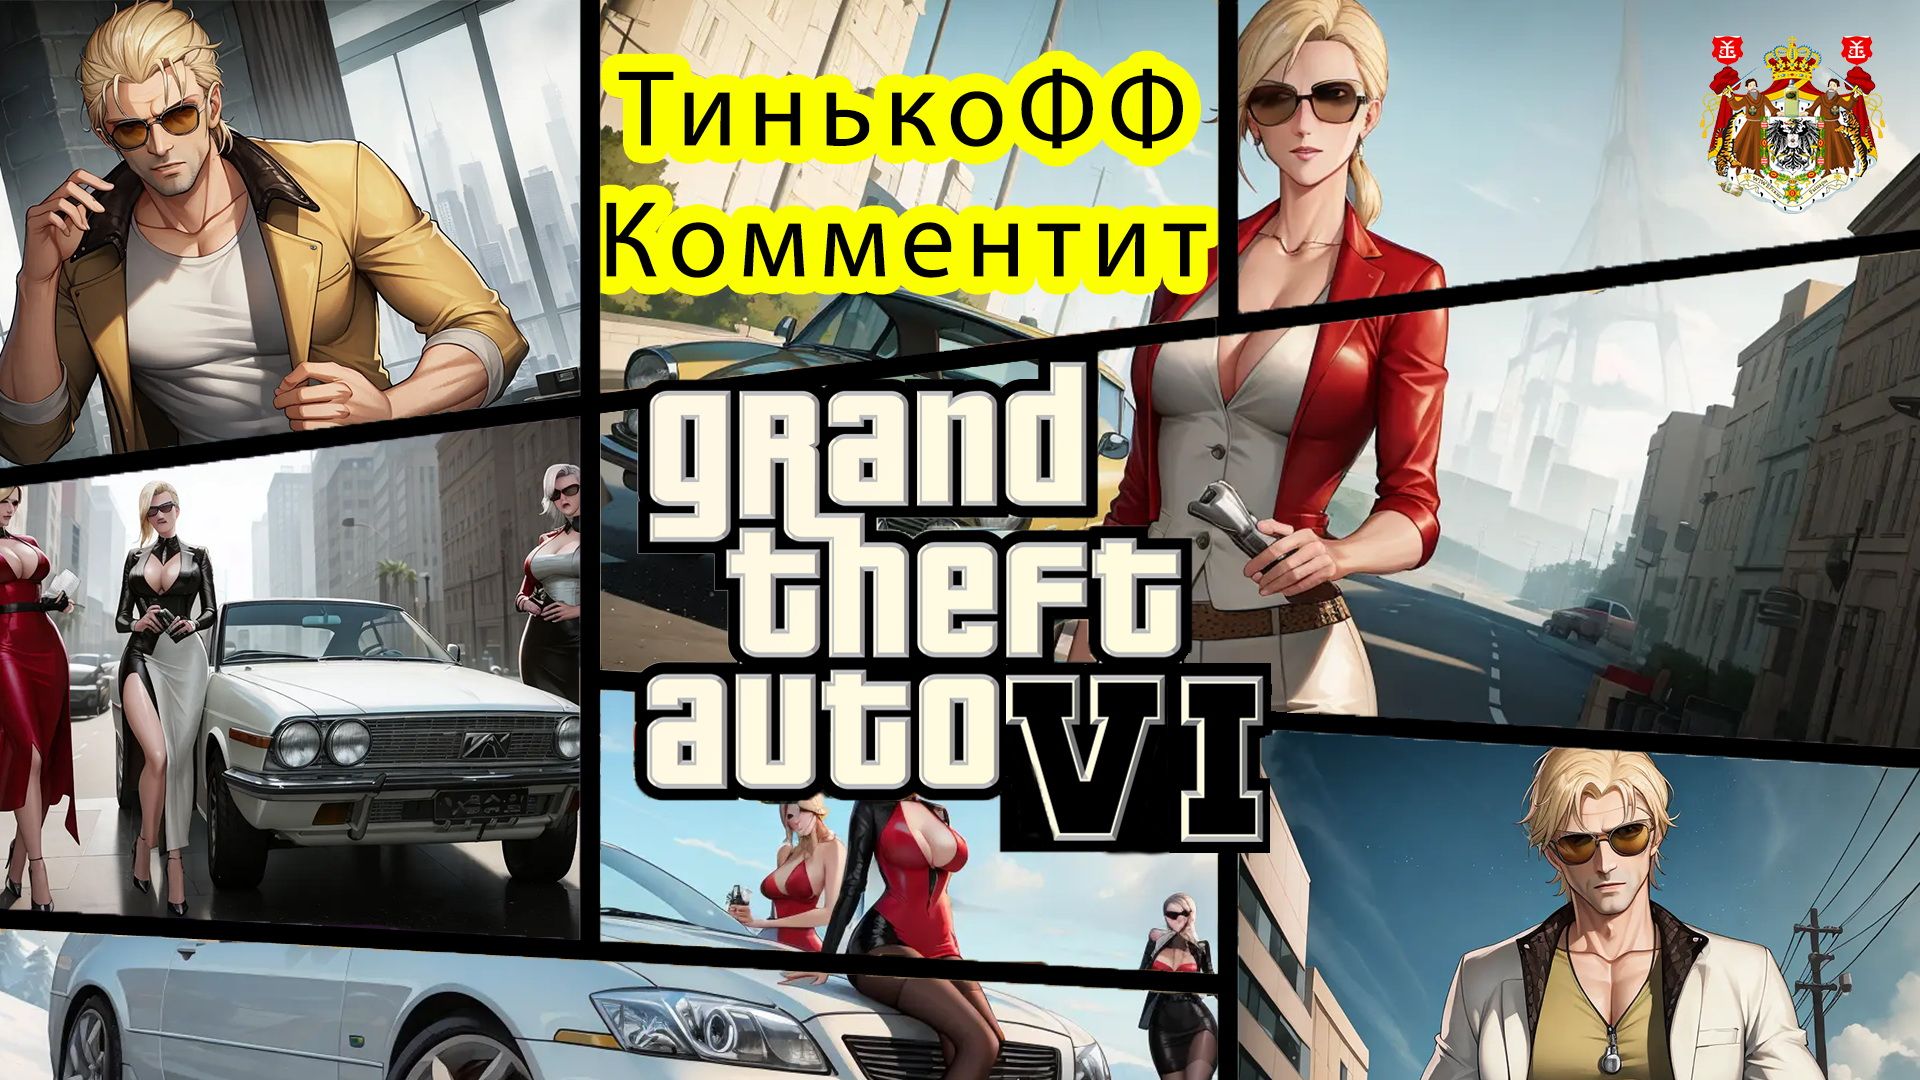 CA 1:00 / 1:49 [Пародия] Олег Тиньков Комментирует Grand Theft Auto VI (GTA 6)